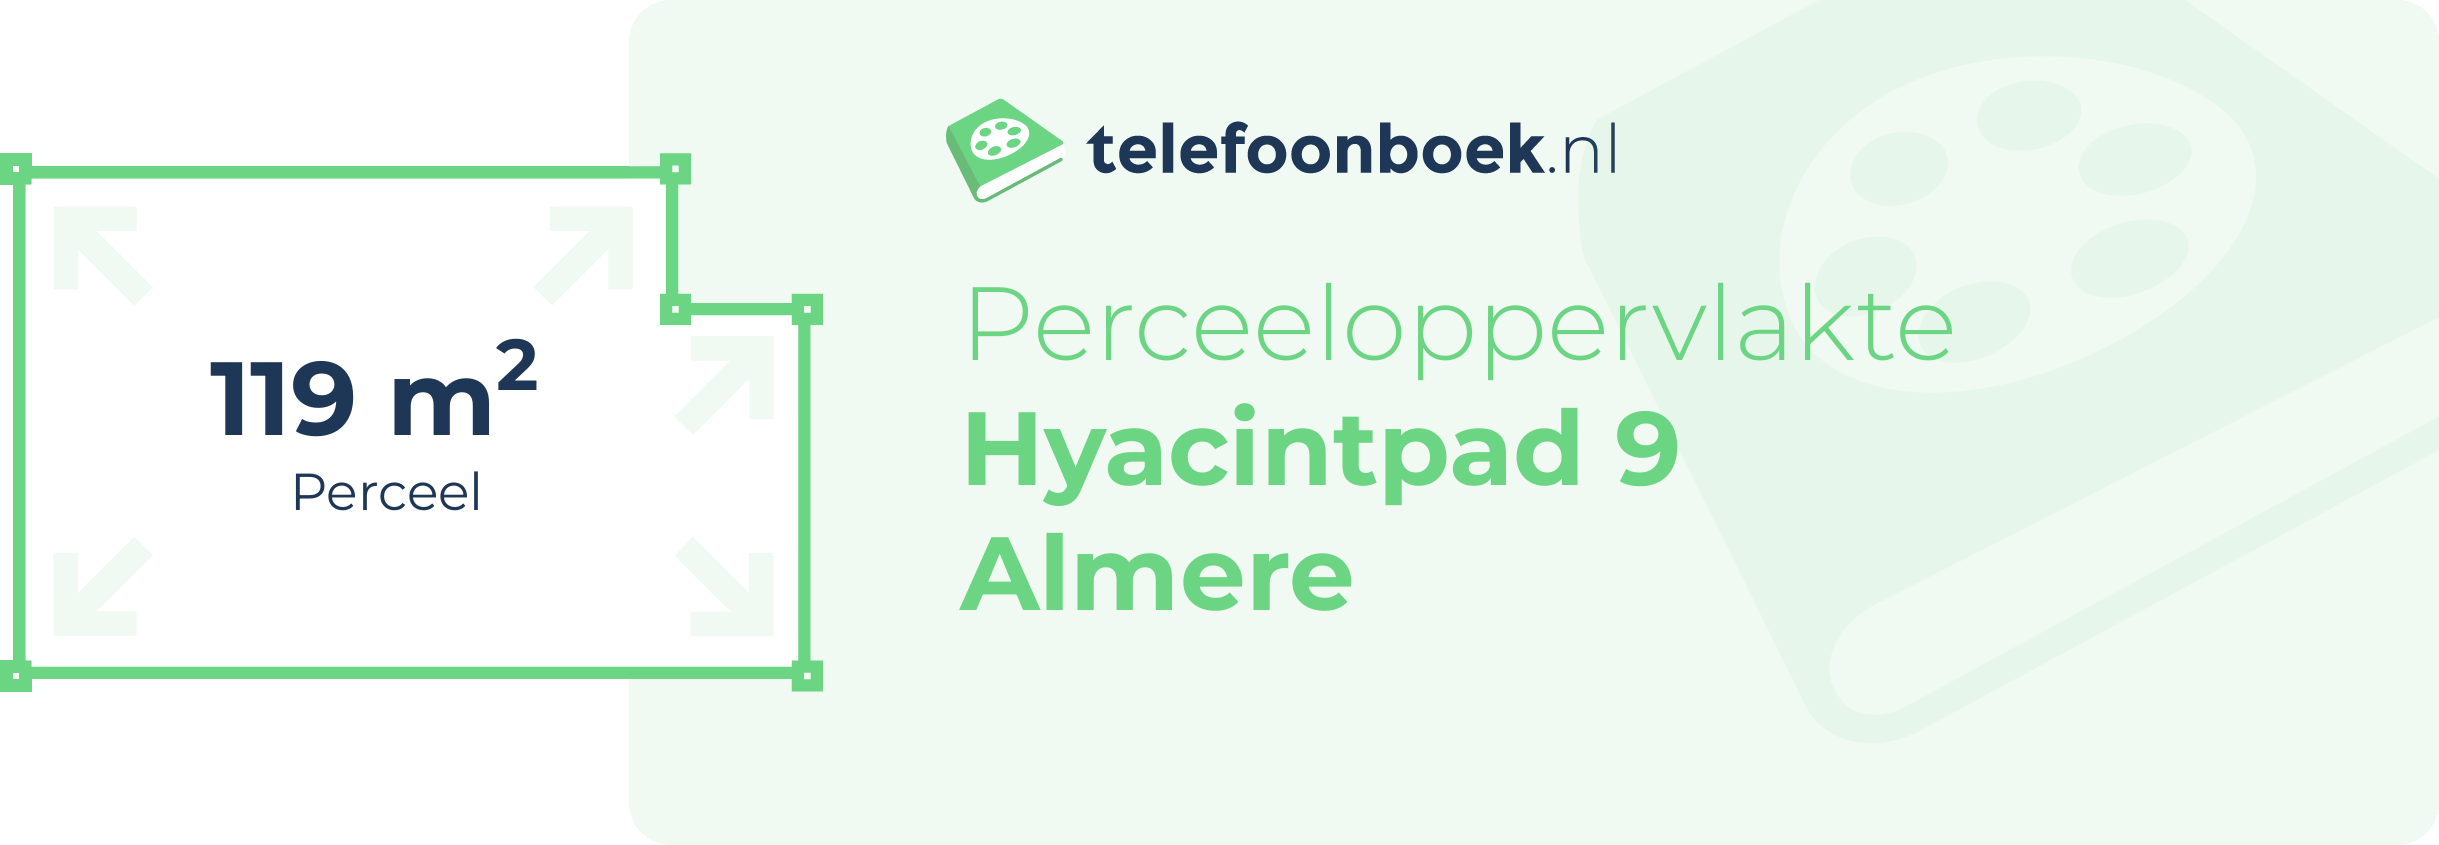 Perceeloppervlakte Hyacintpad 9 Almere